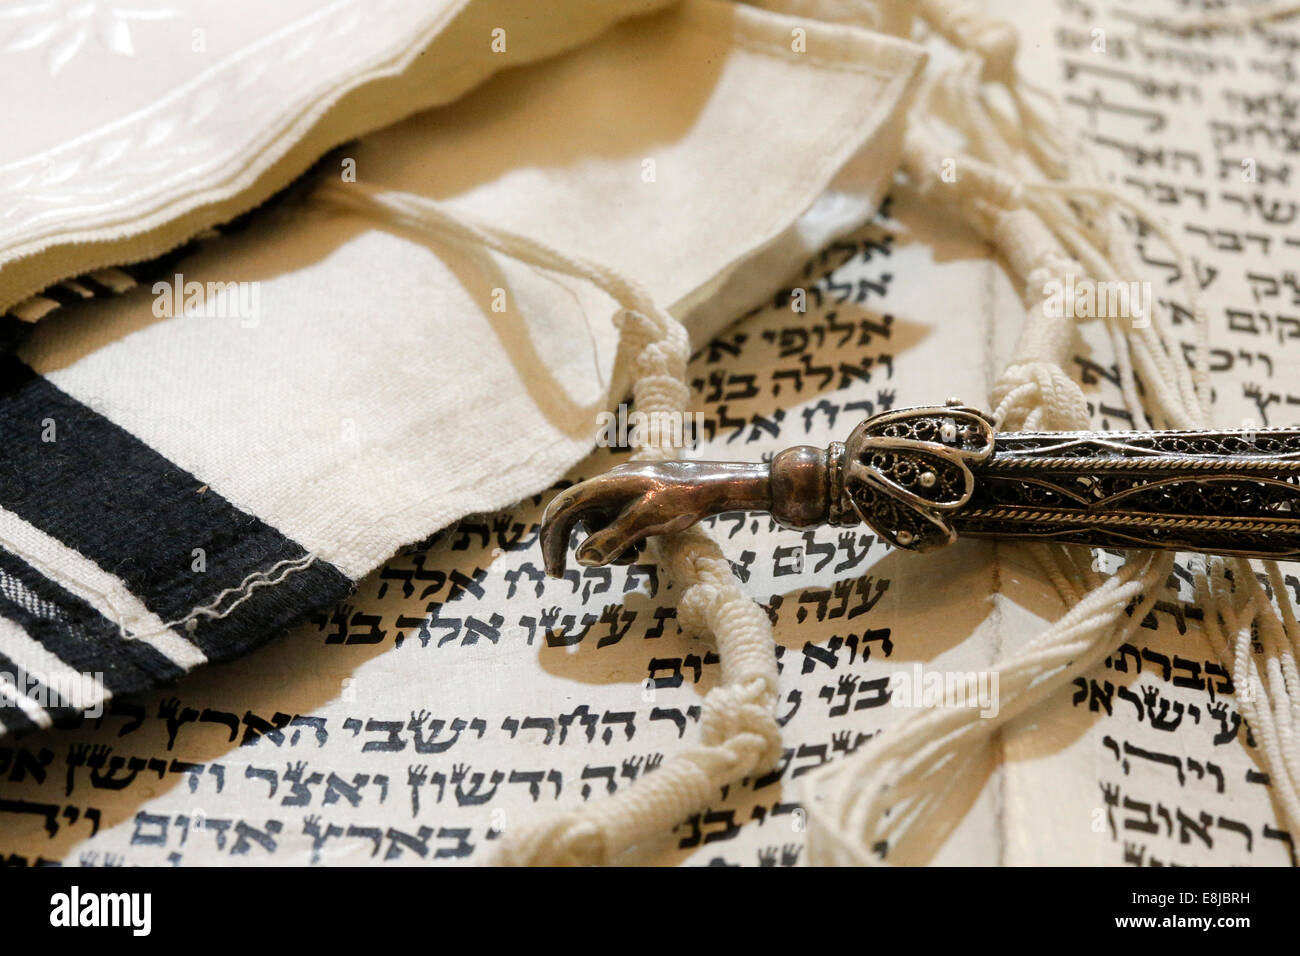 Torah scroll, Yad, Torah pointer, and Tallit, Jewish prayer shawl. Stock Photo